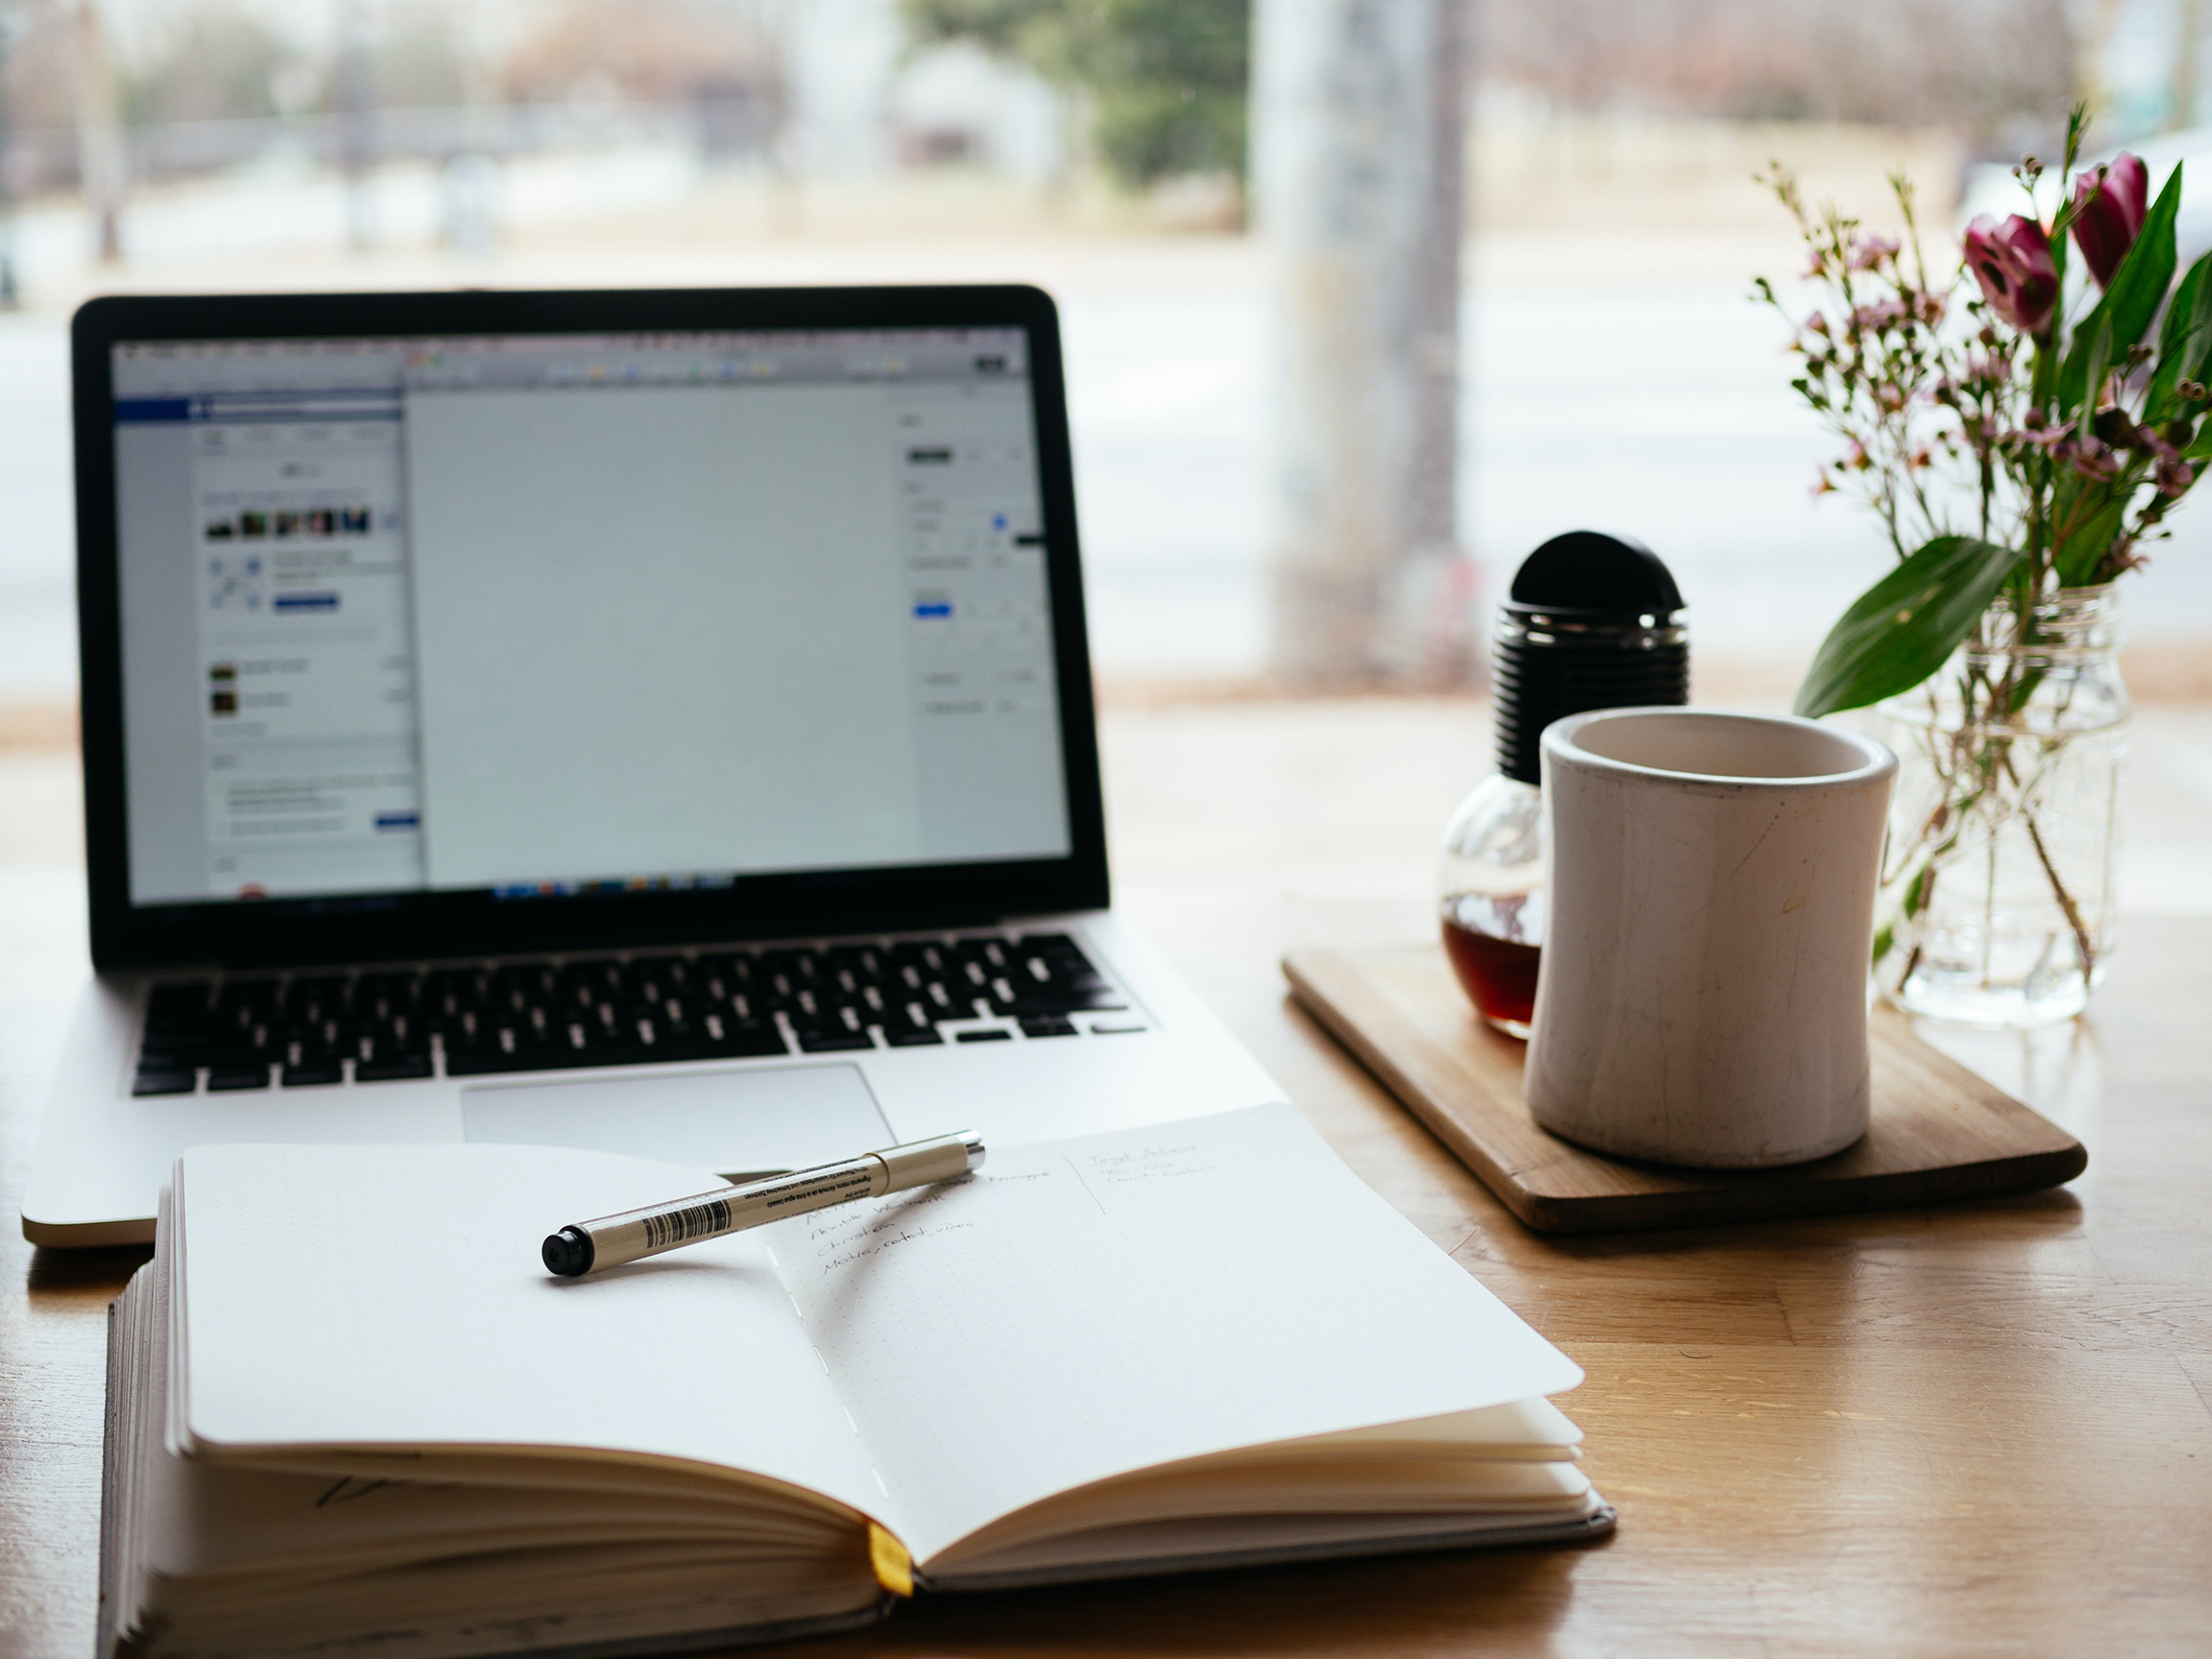 Computer, Pen, Paper and Coffee mug on table to iillustrate good WordPress blog design